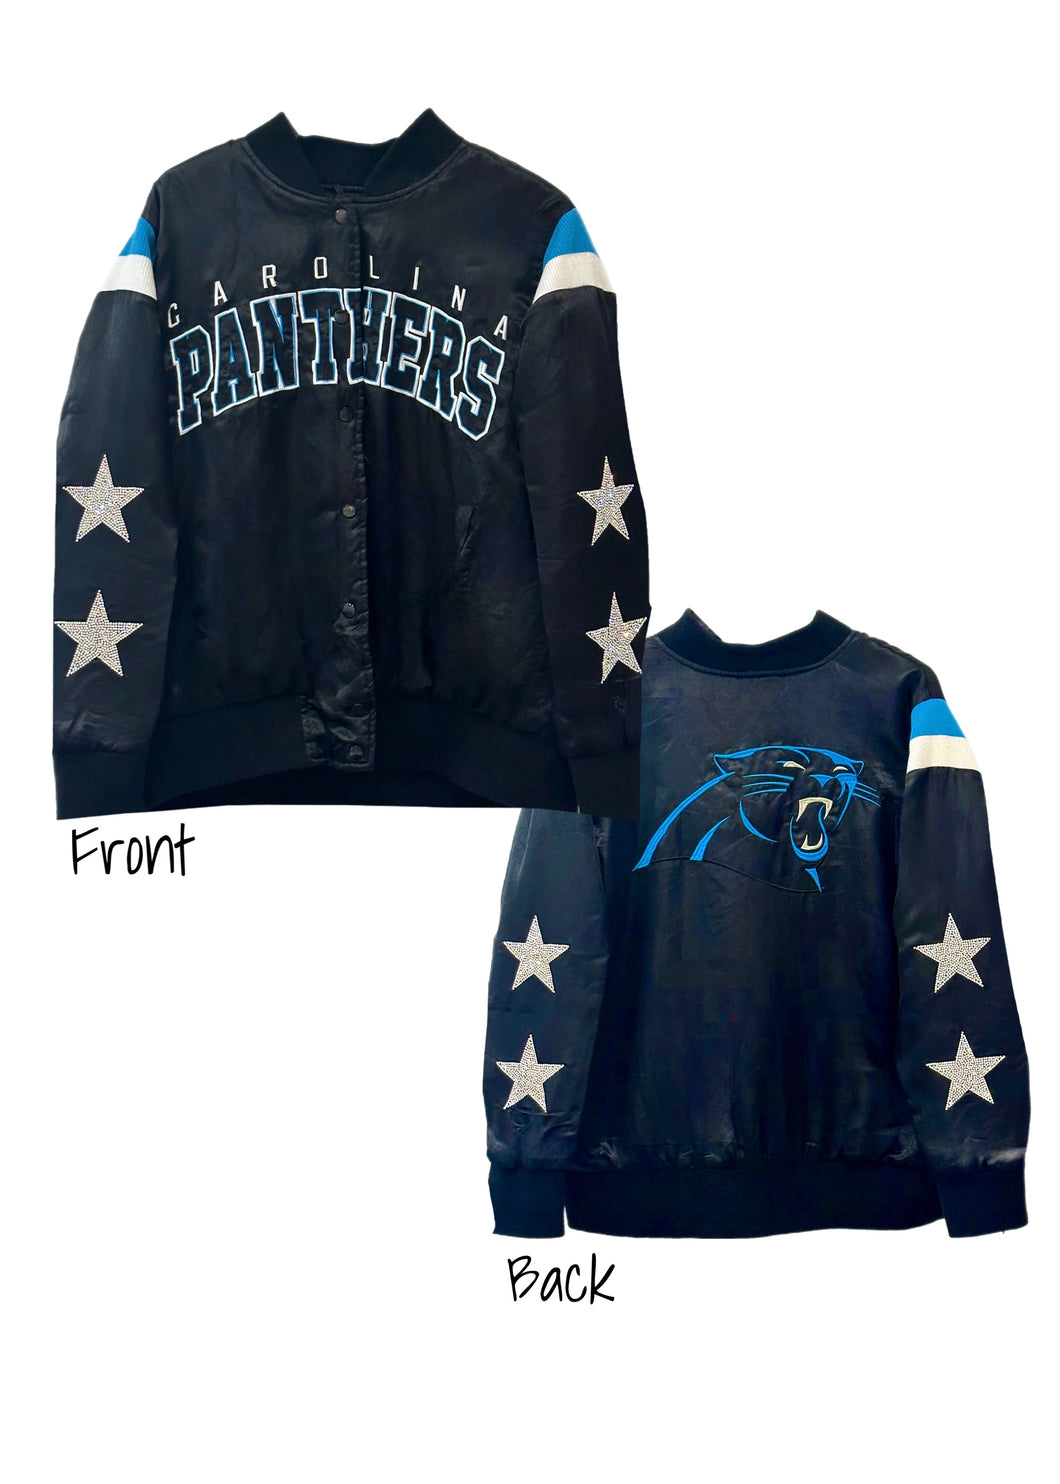 Carolina Panthers, NFL One of a KIND Soft Satiny Vintage Bomber Jacket with Crystal Star Design